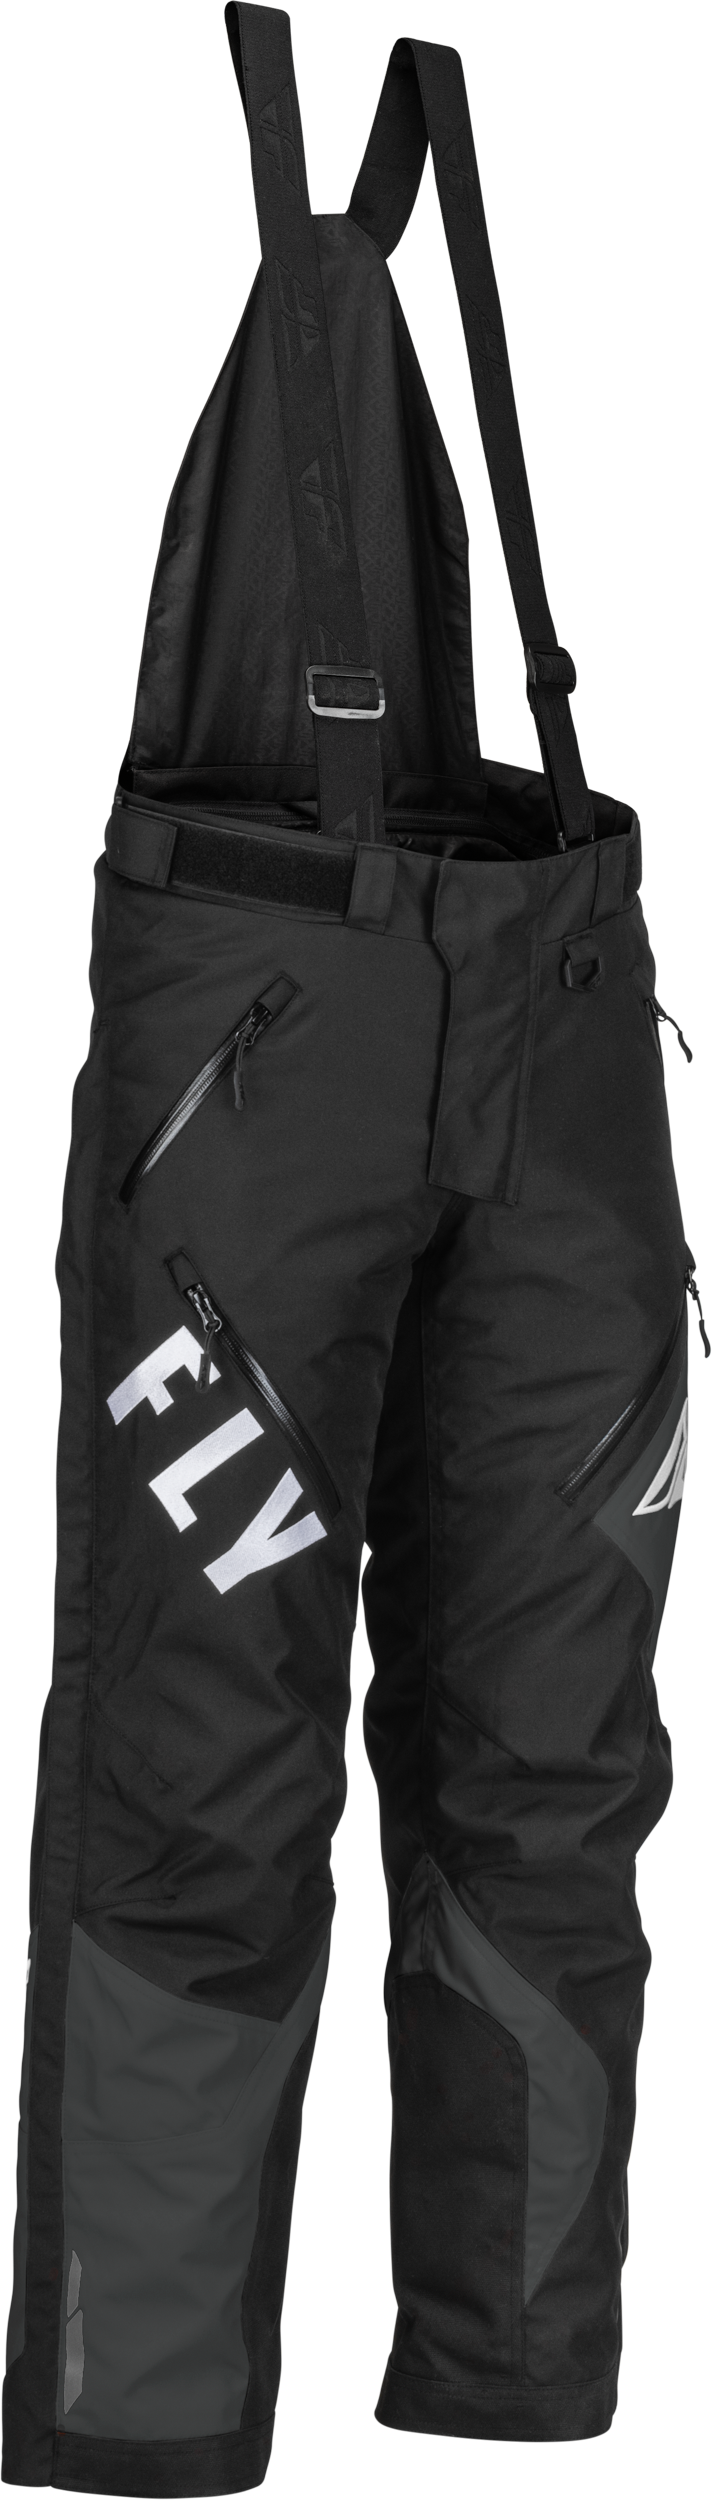 FLY RACING Women's Snx Pro Pants Black/Grey Md 470-4516M